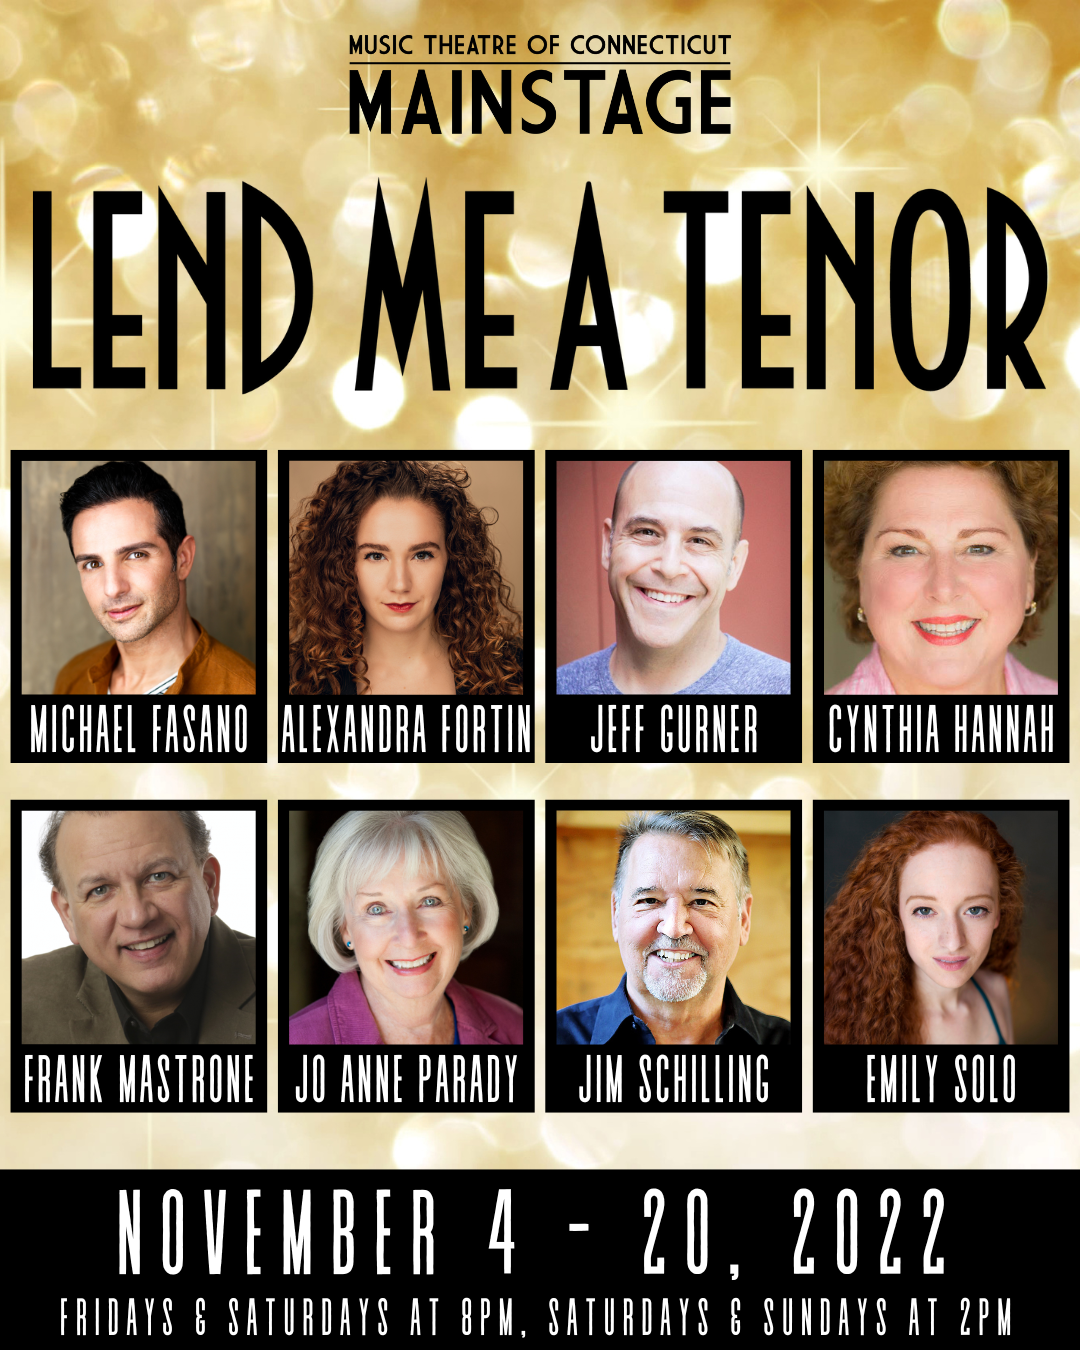 The cast of MTC's Lend Me A Tenor!